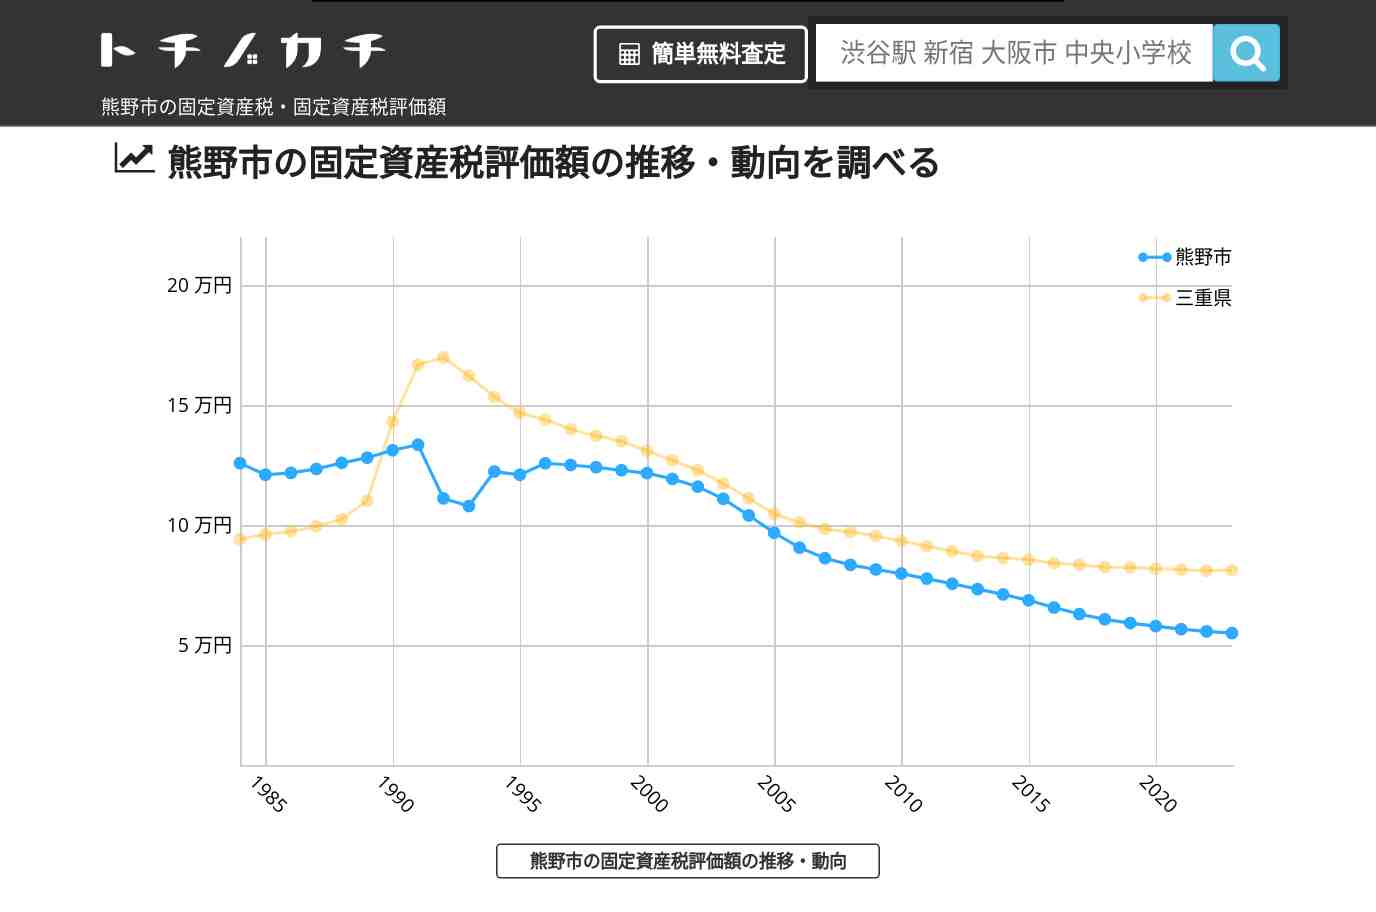 入鹿小学校(三重県 熊野市)周辺の固定資産税・固定資産税評価額 | トチノカチ